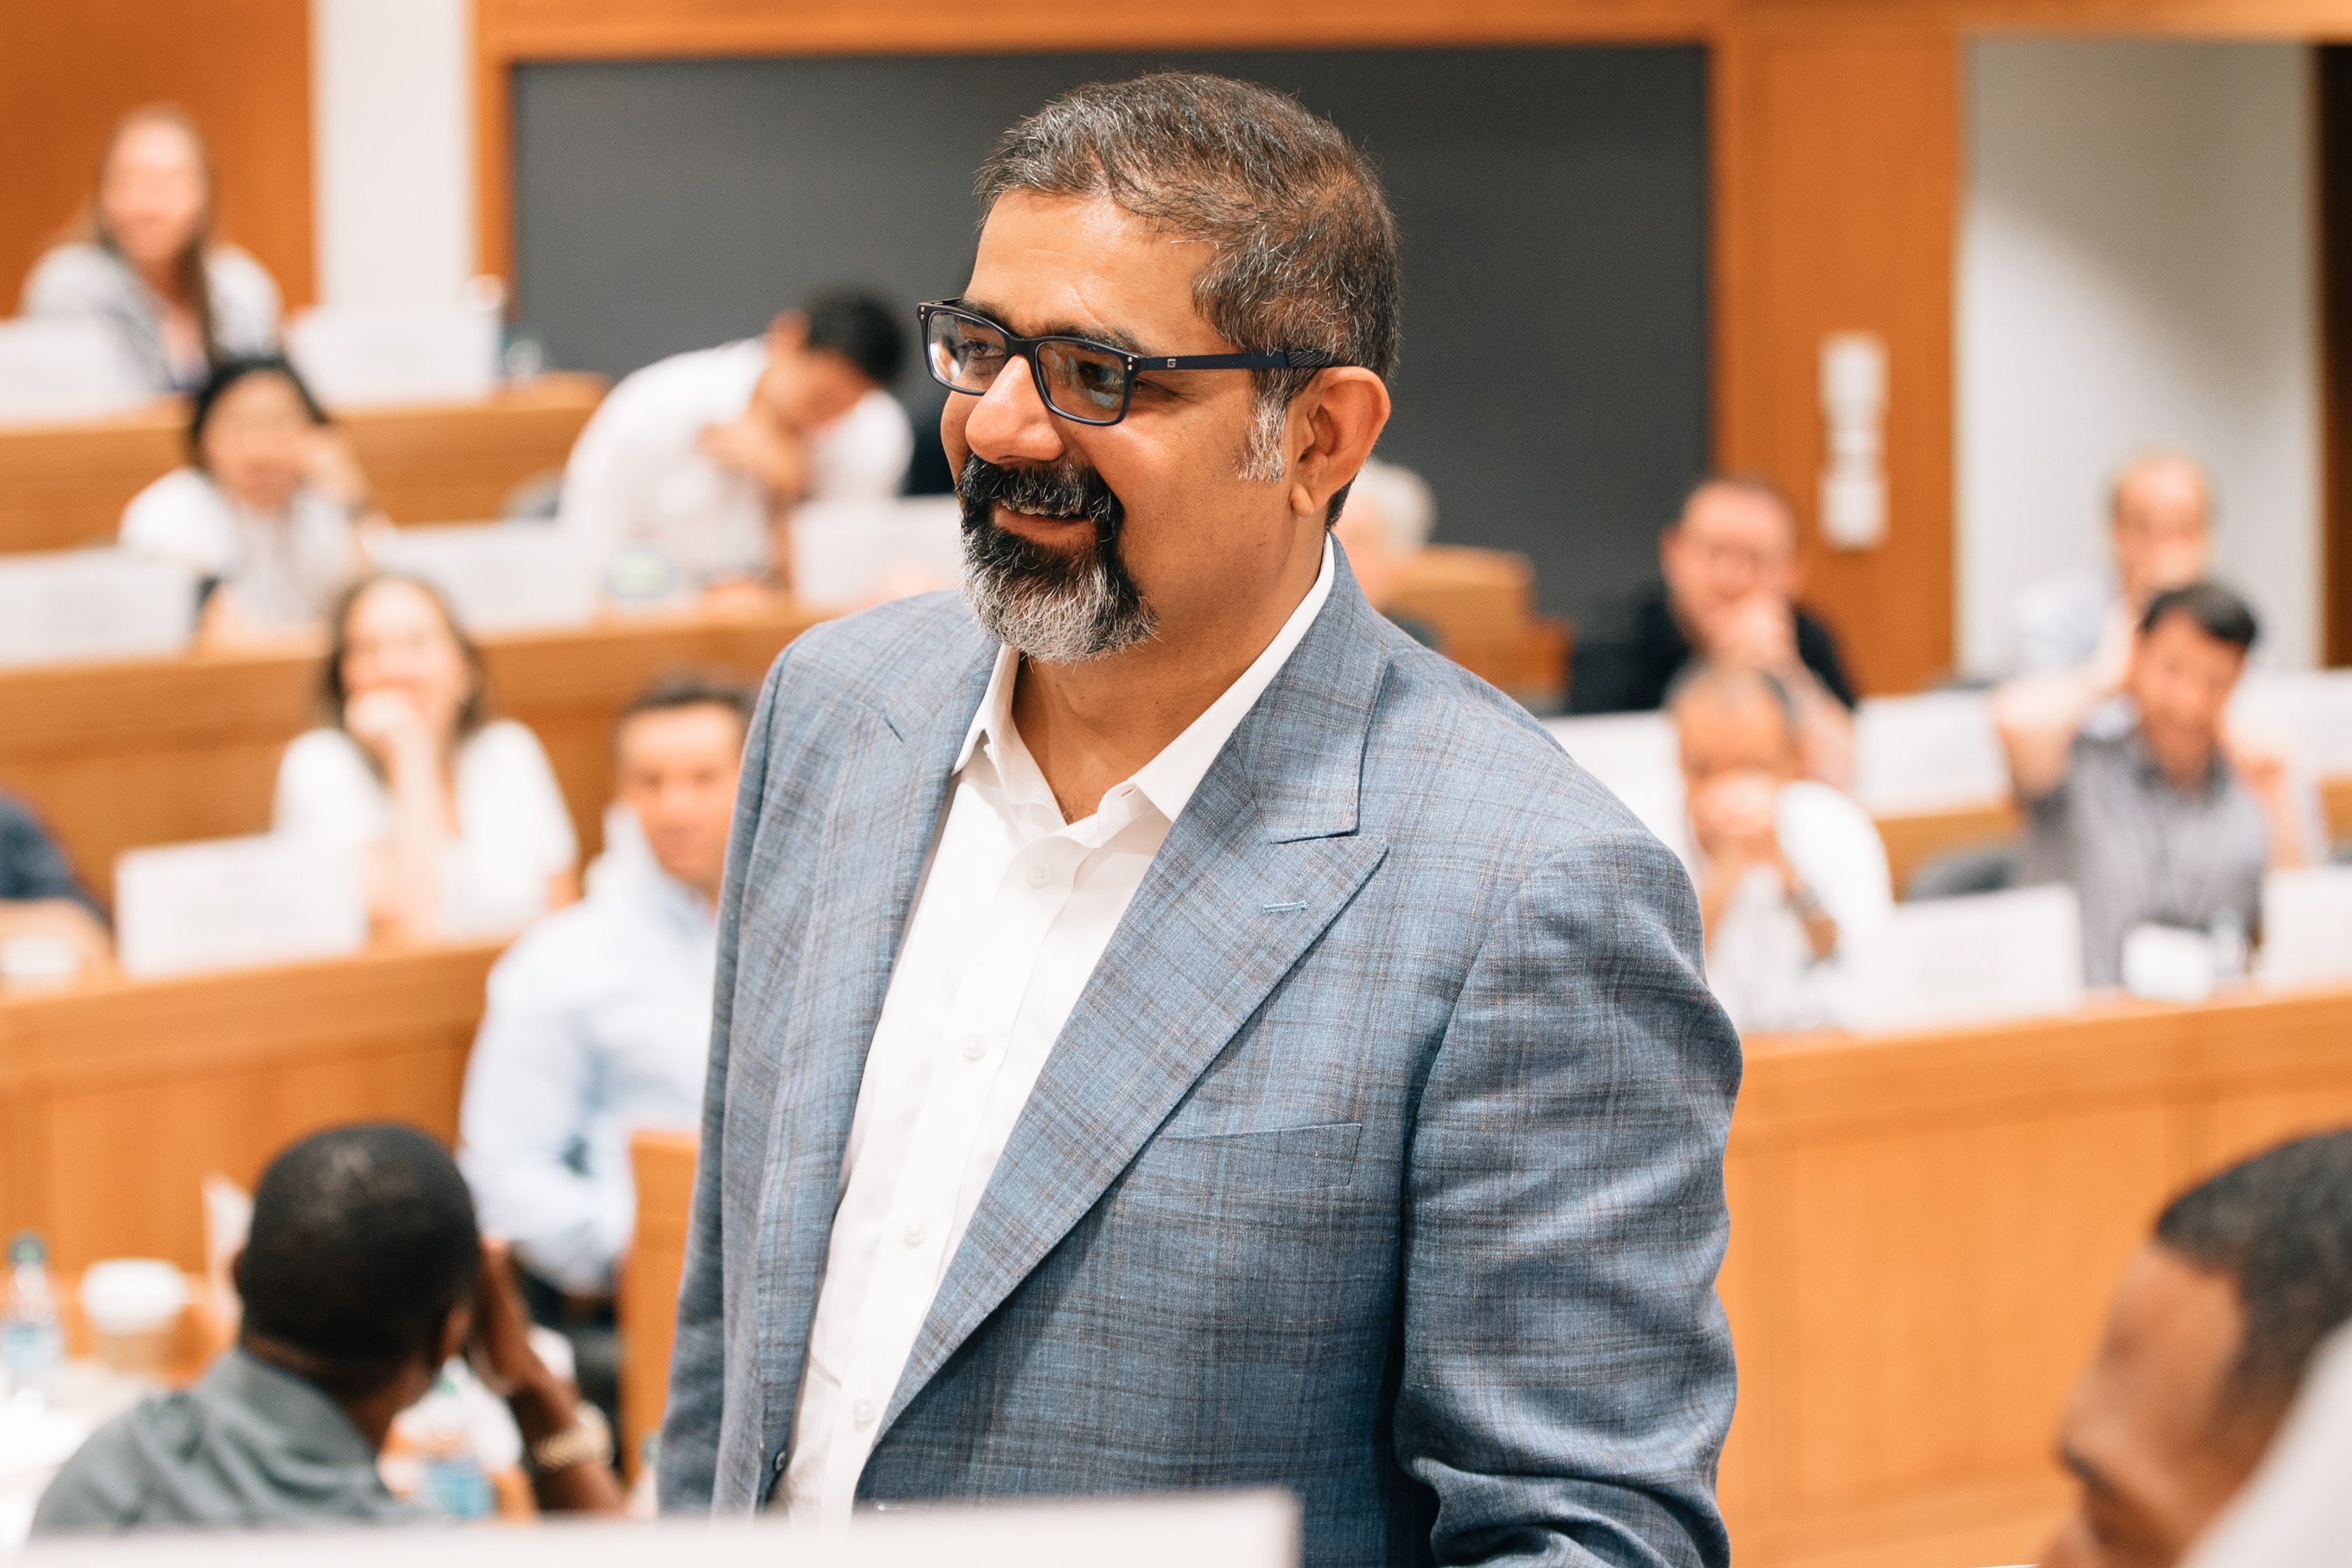 Karim Lakhani | Leading Scholar of Technology Management and Innovation Experiments